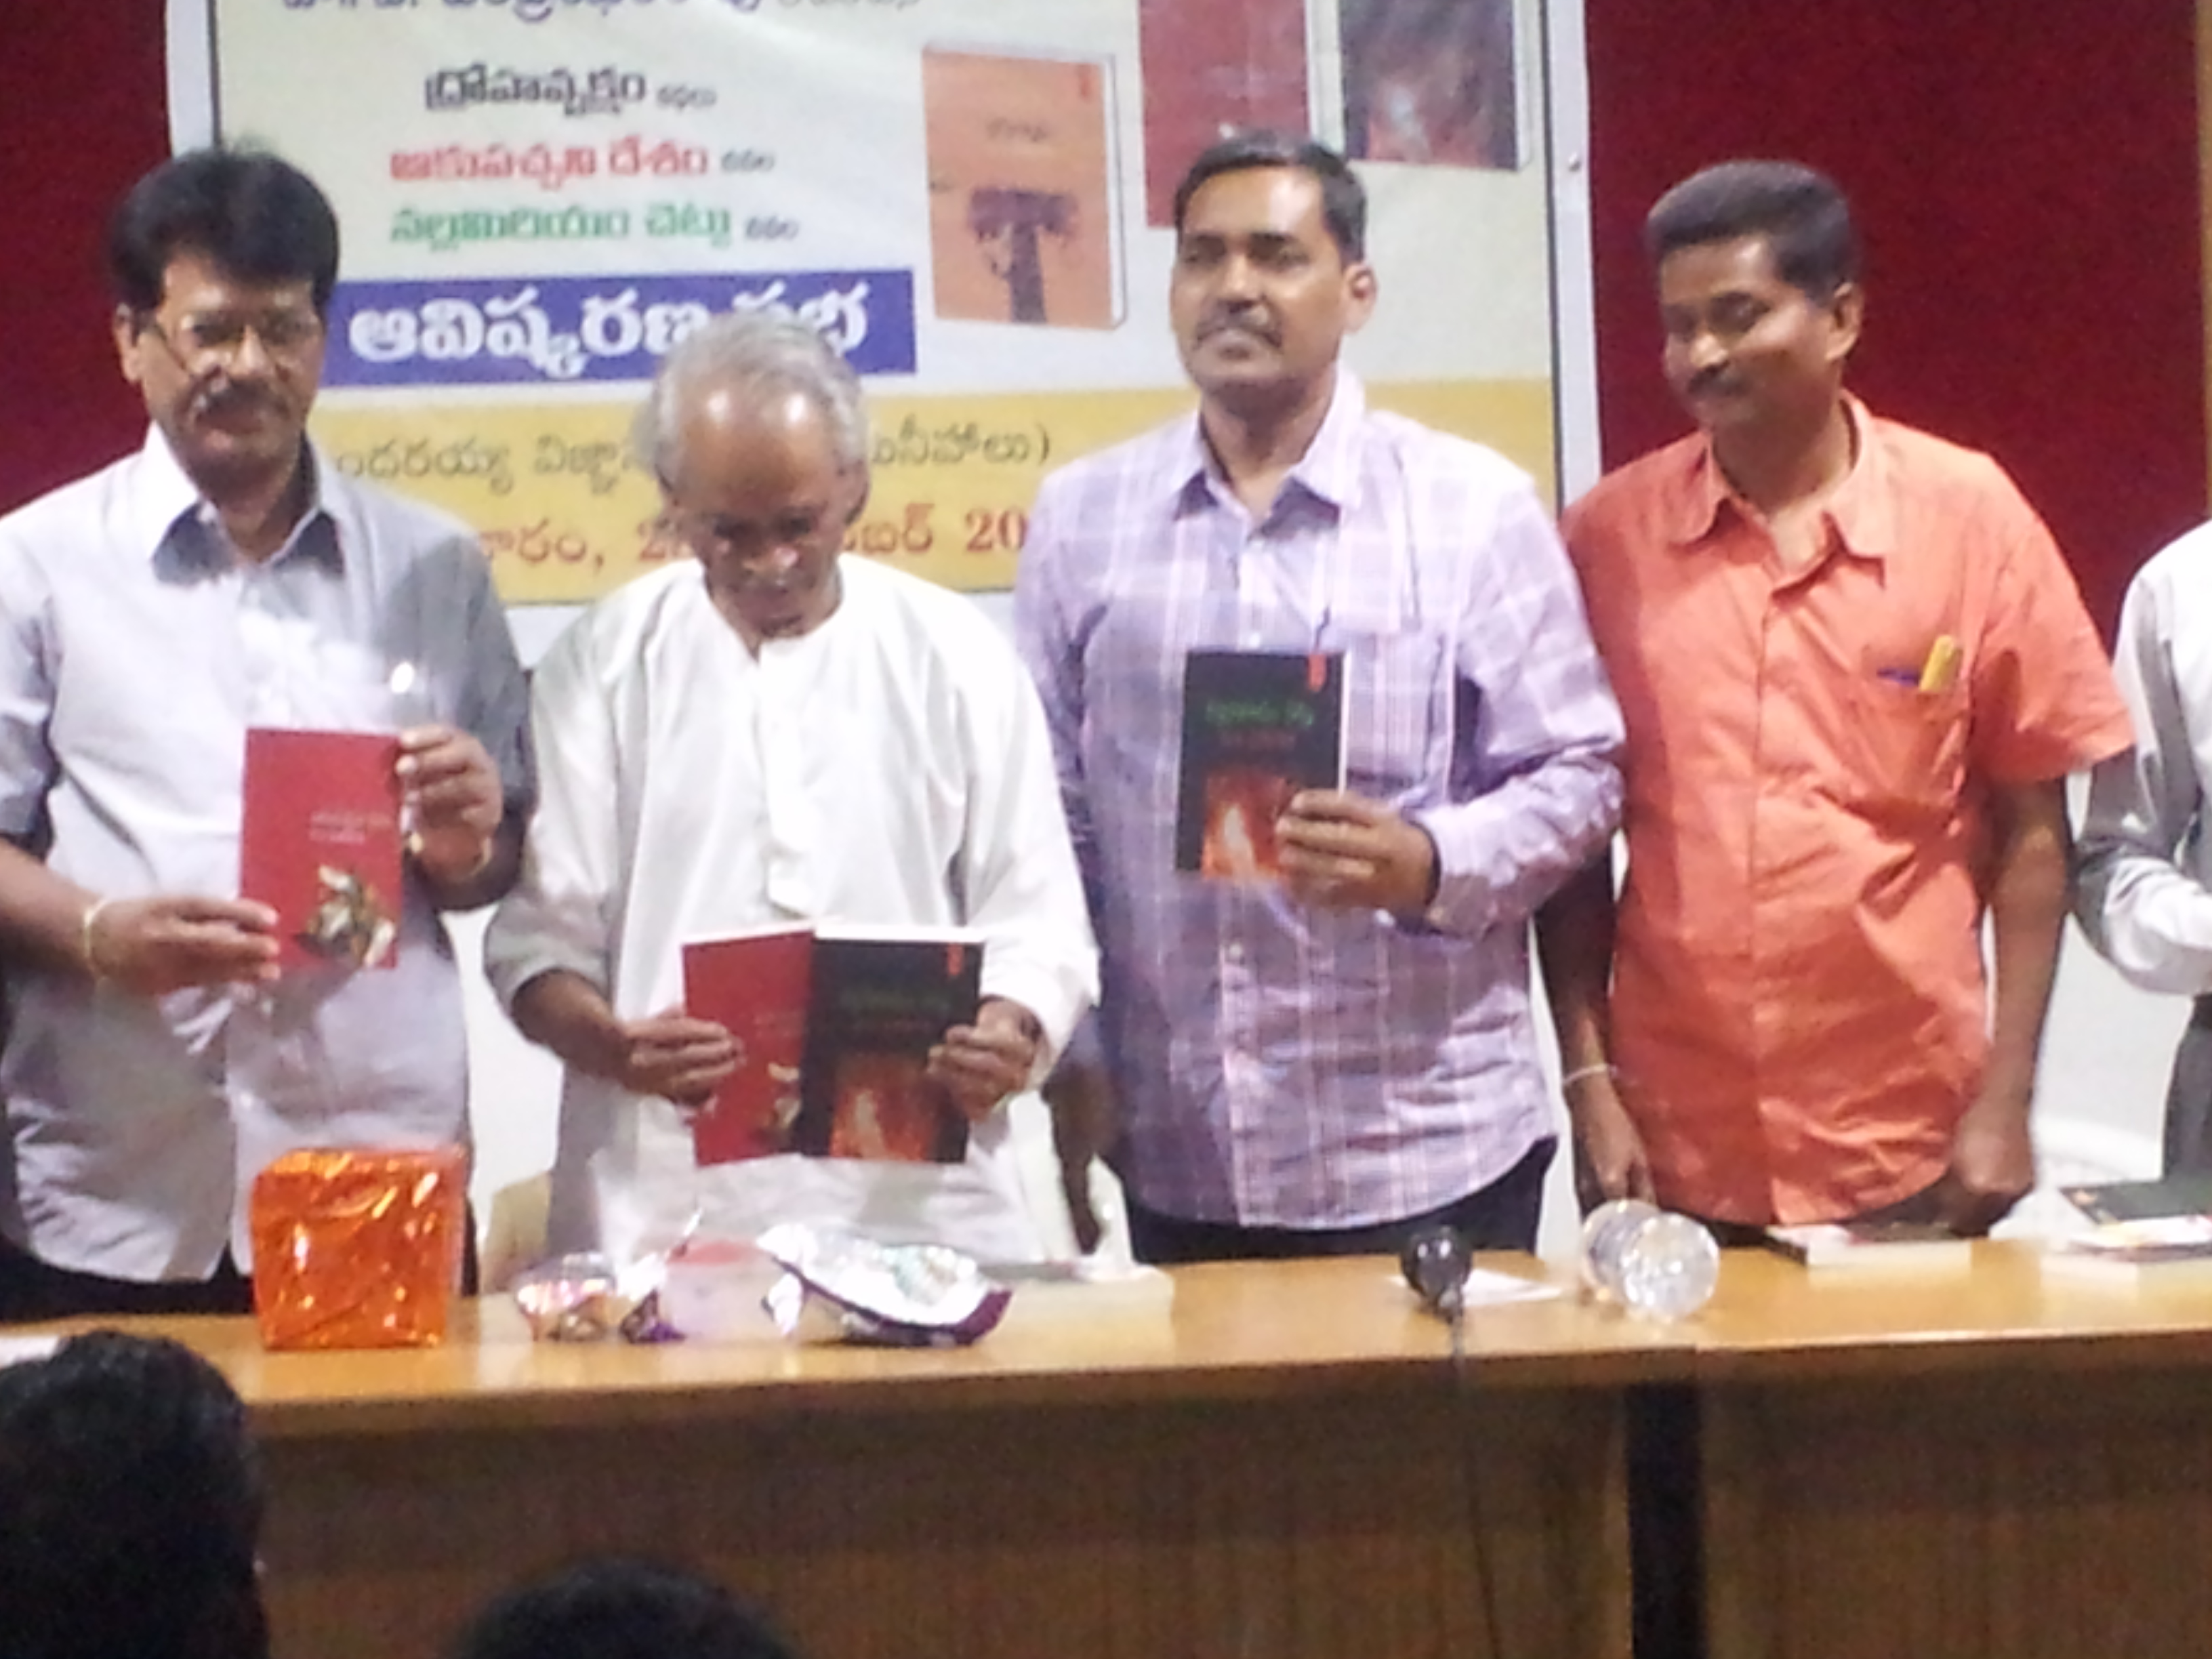 Dr. v chandrasekhara Rao novels release function